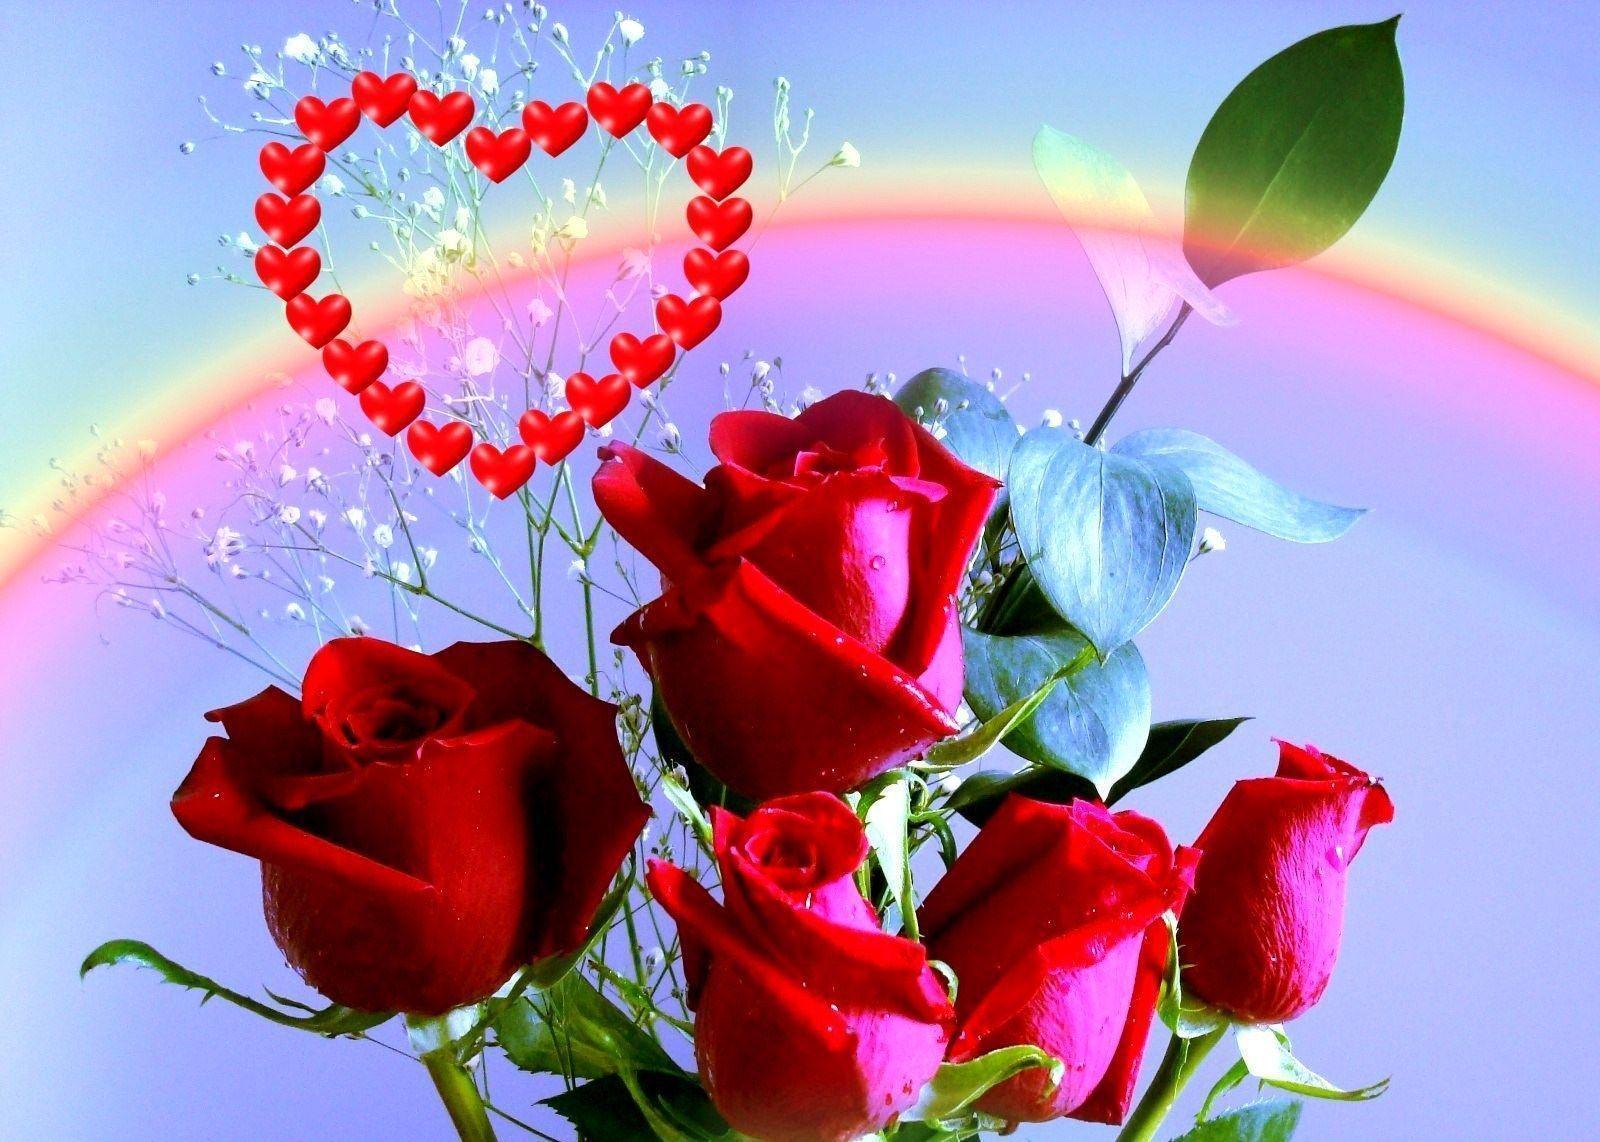 Art: Red Roses, broken heart wallpaper hd, heart of the swarm